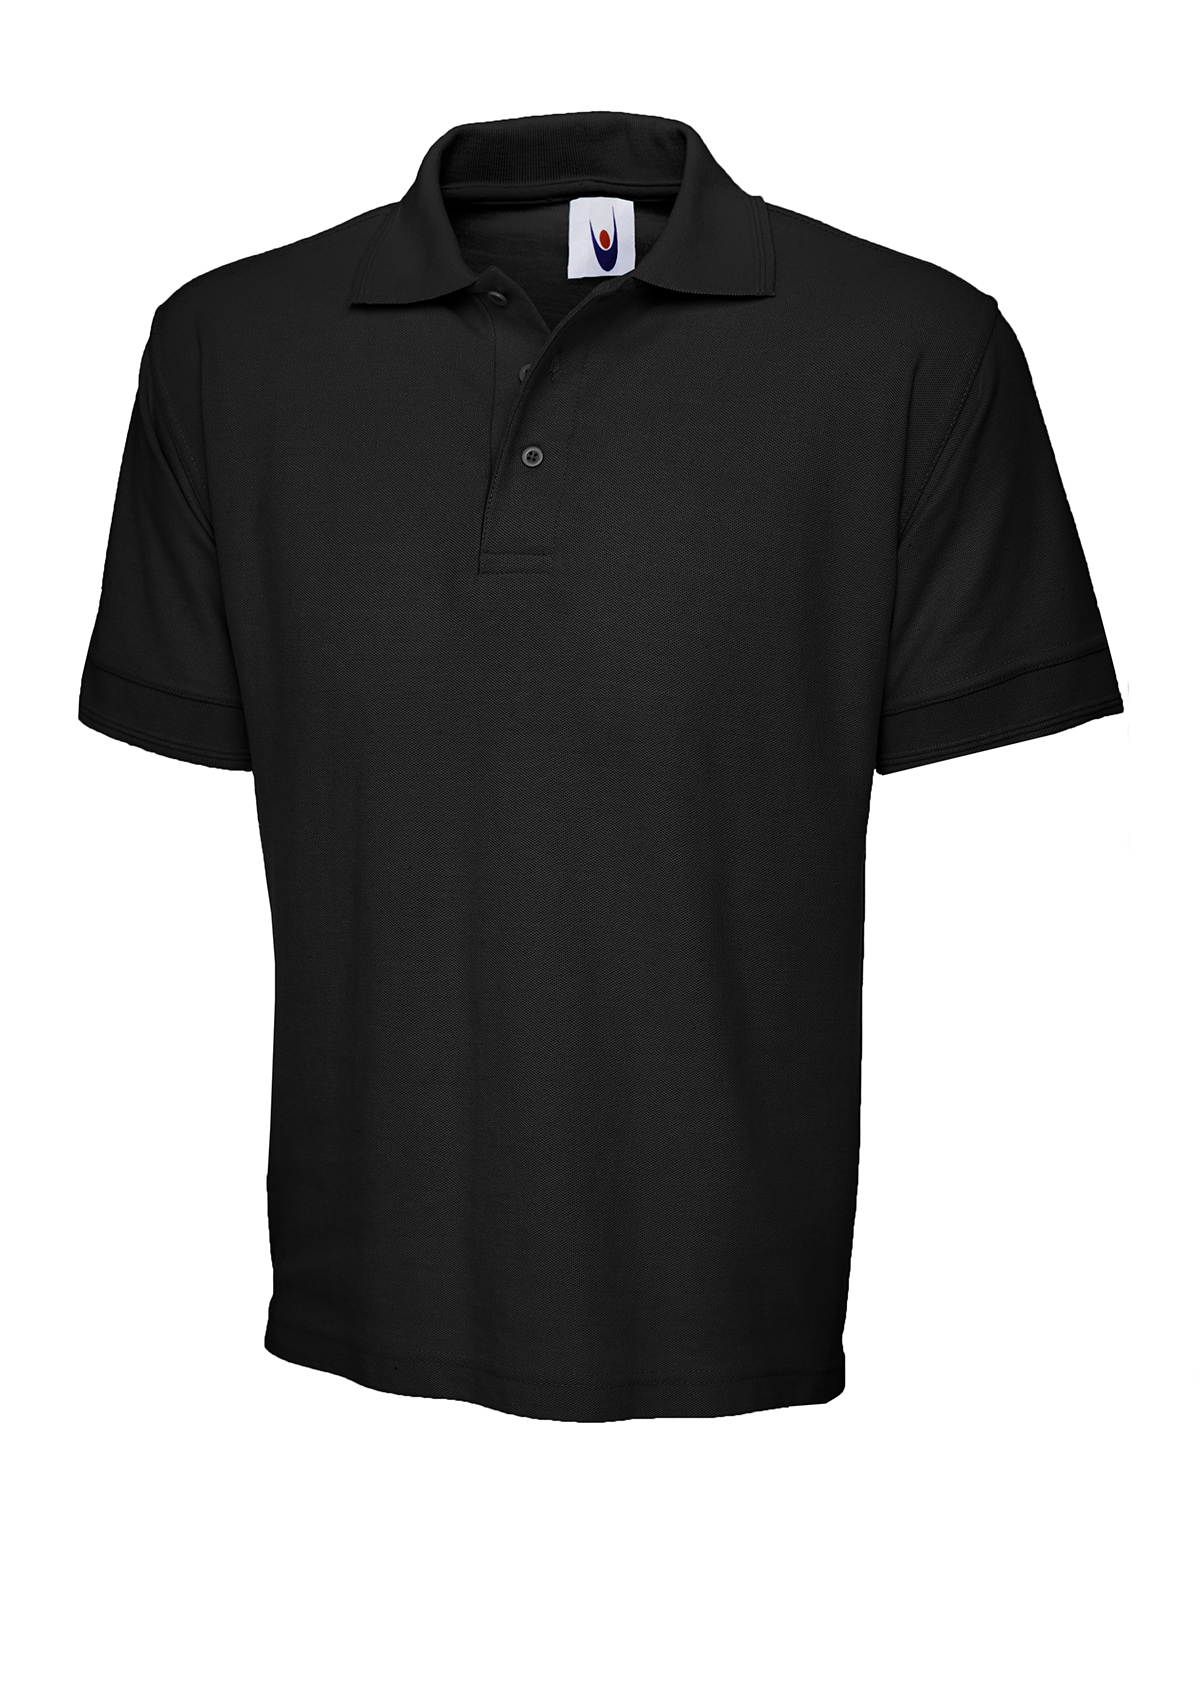 Uneek Herren Premium Poloshirt schwarz